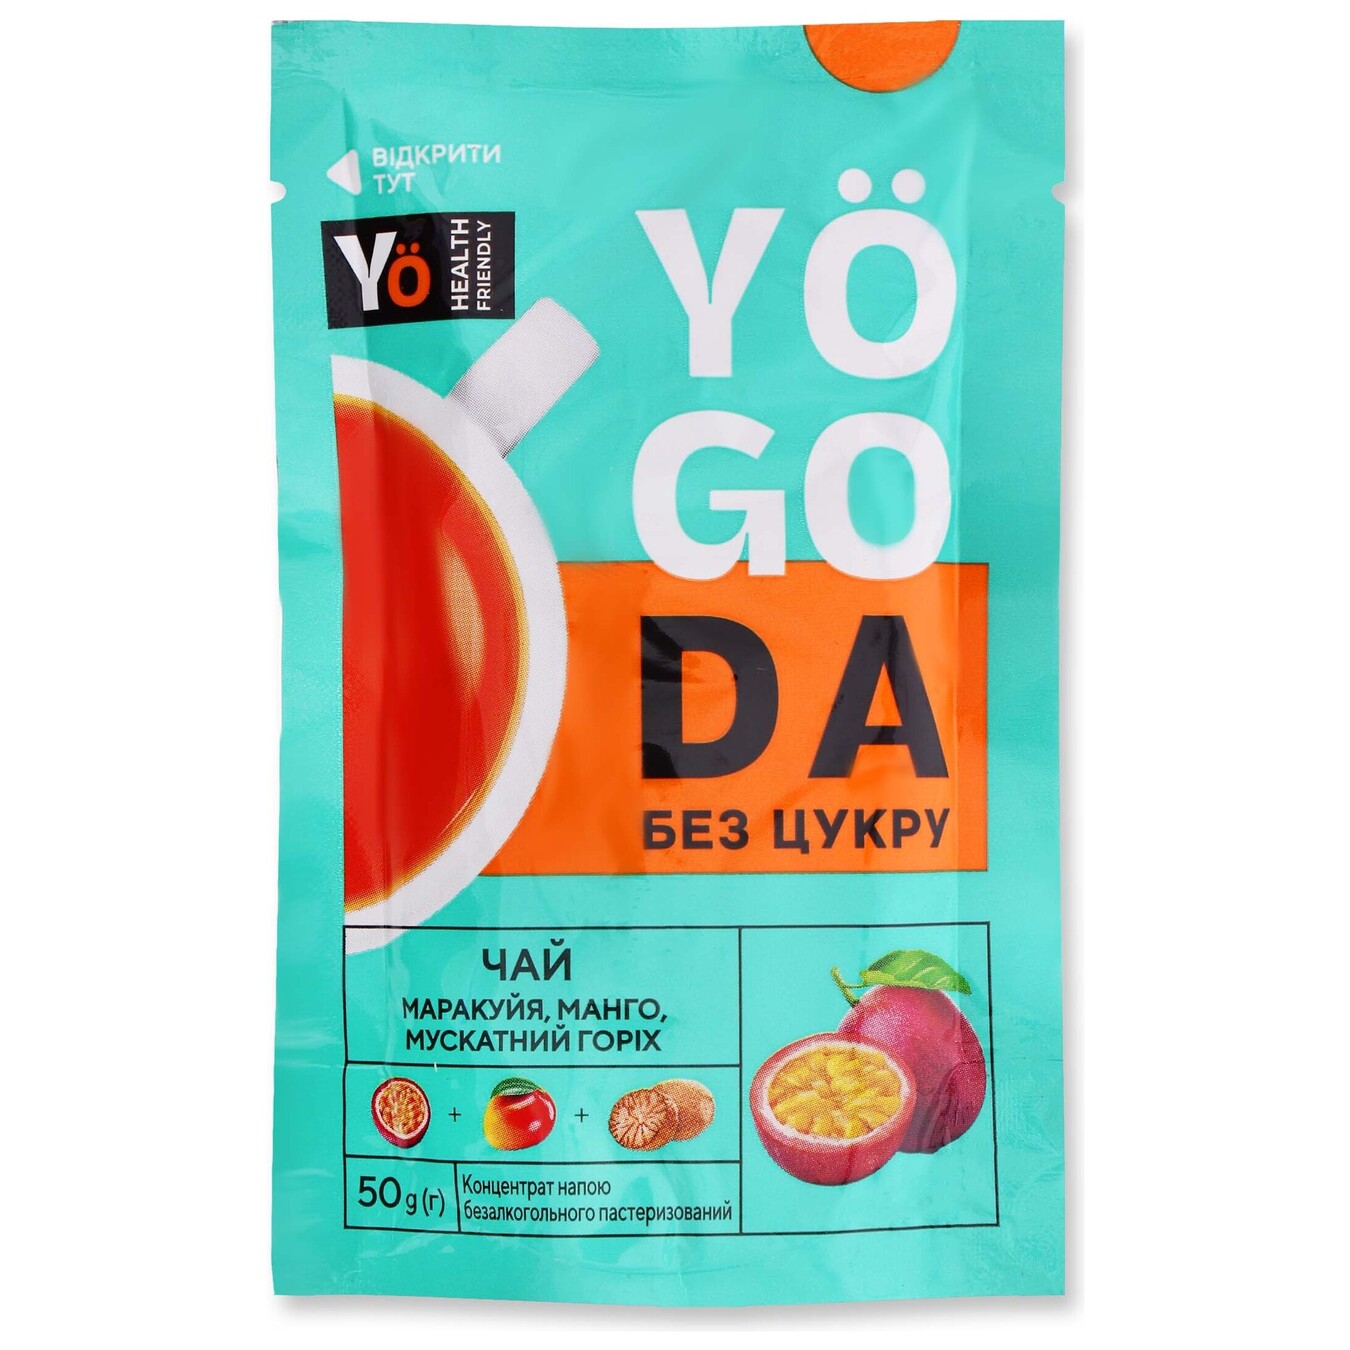 Tea concentrate Yogoda passion fruit, mango, nutmeg Doi Pack 50g